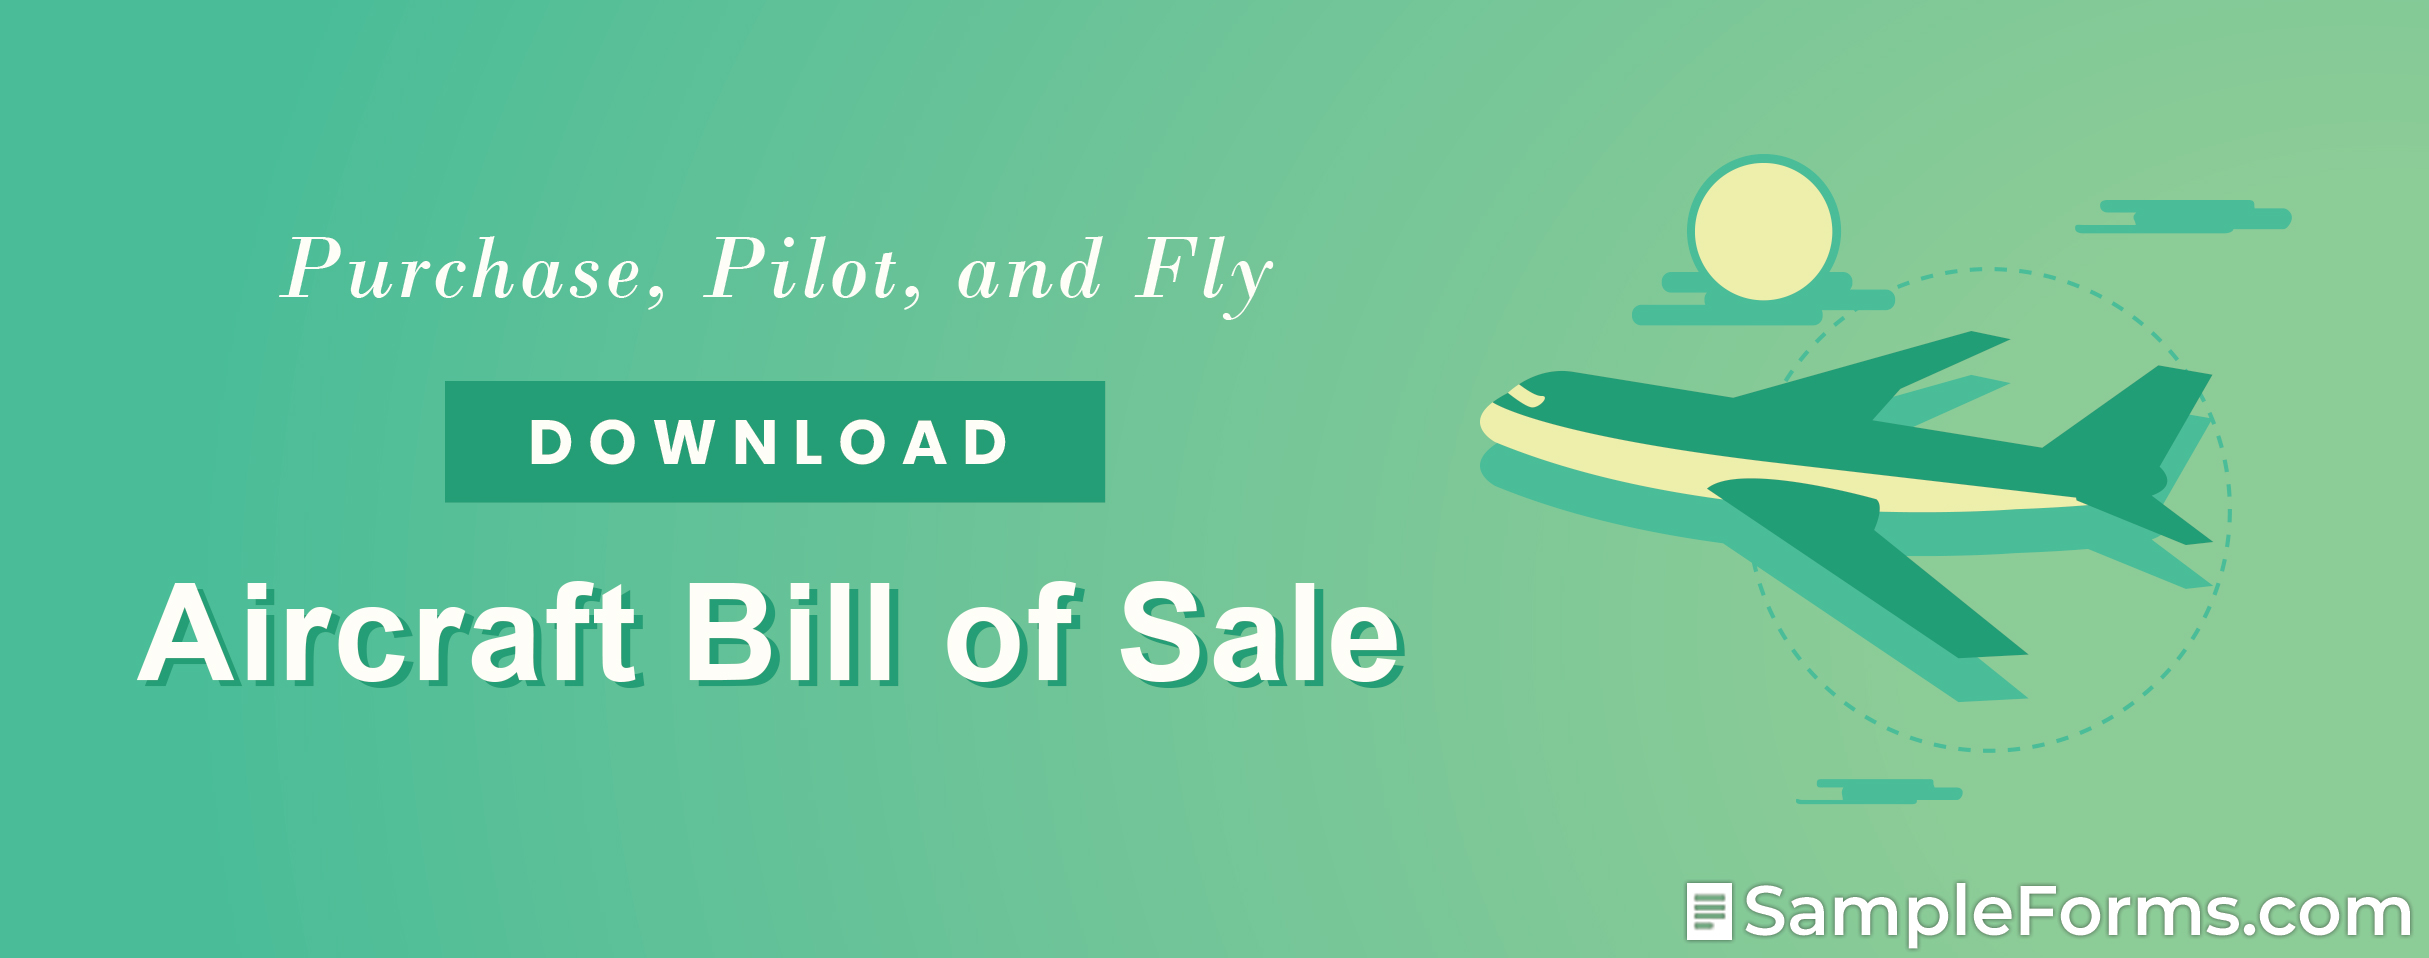 Aircraft Bill of Sale1